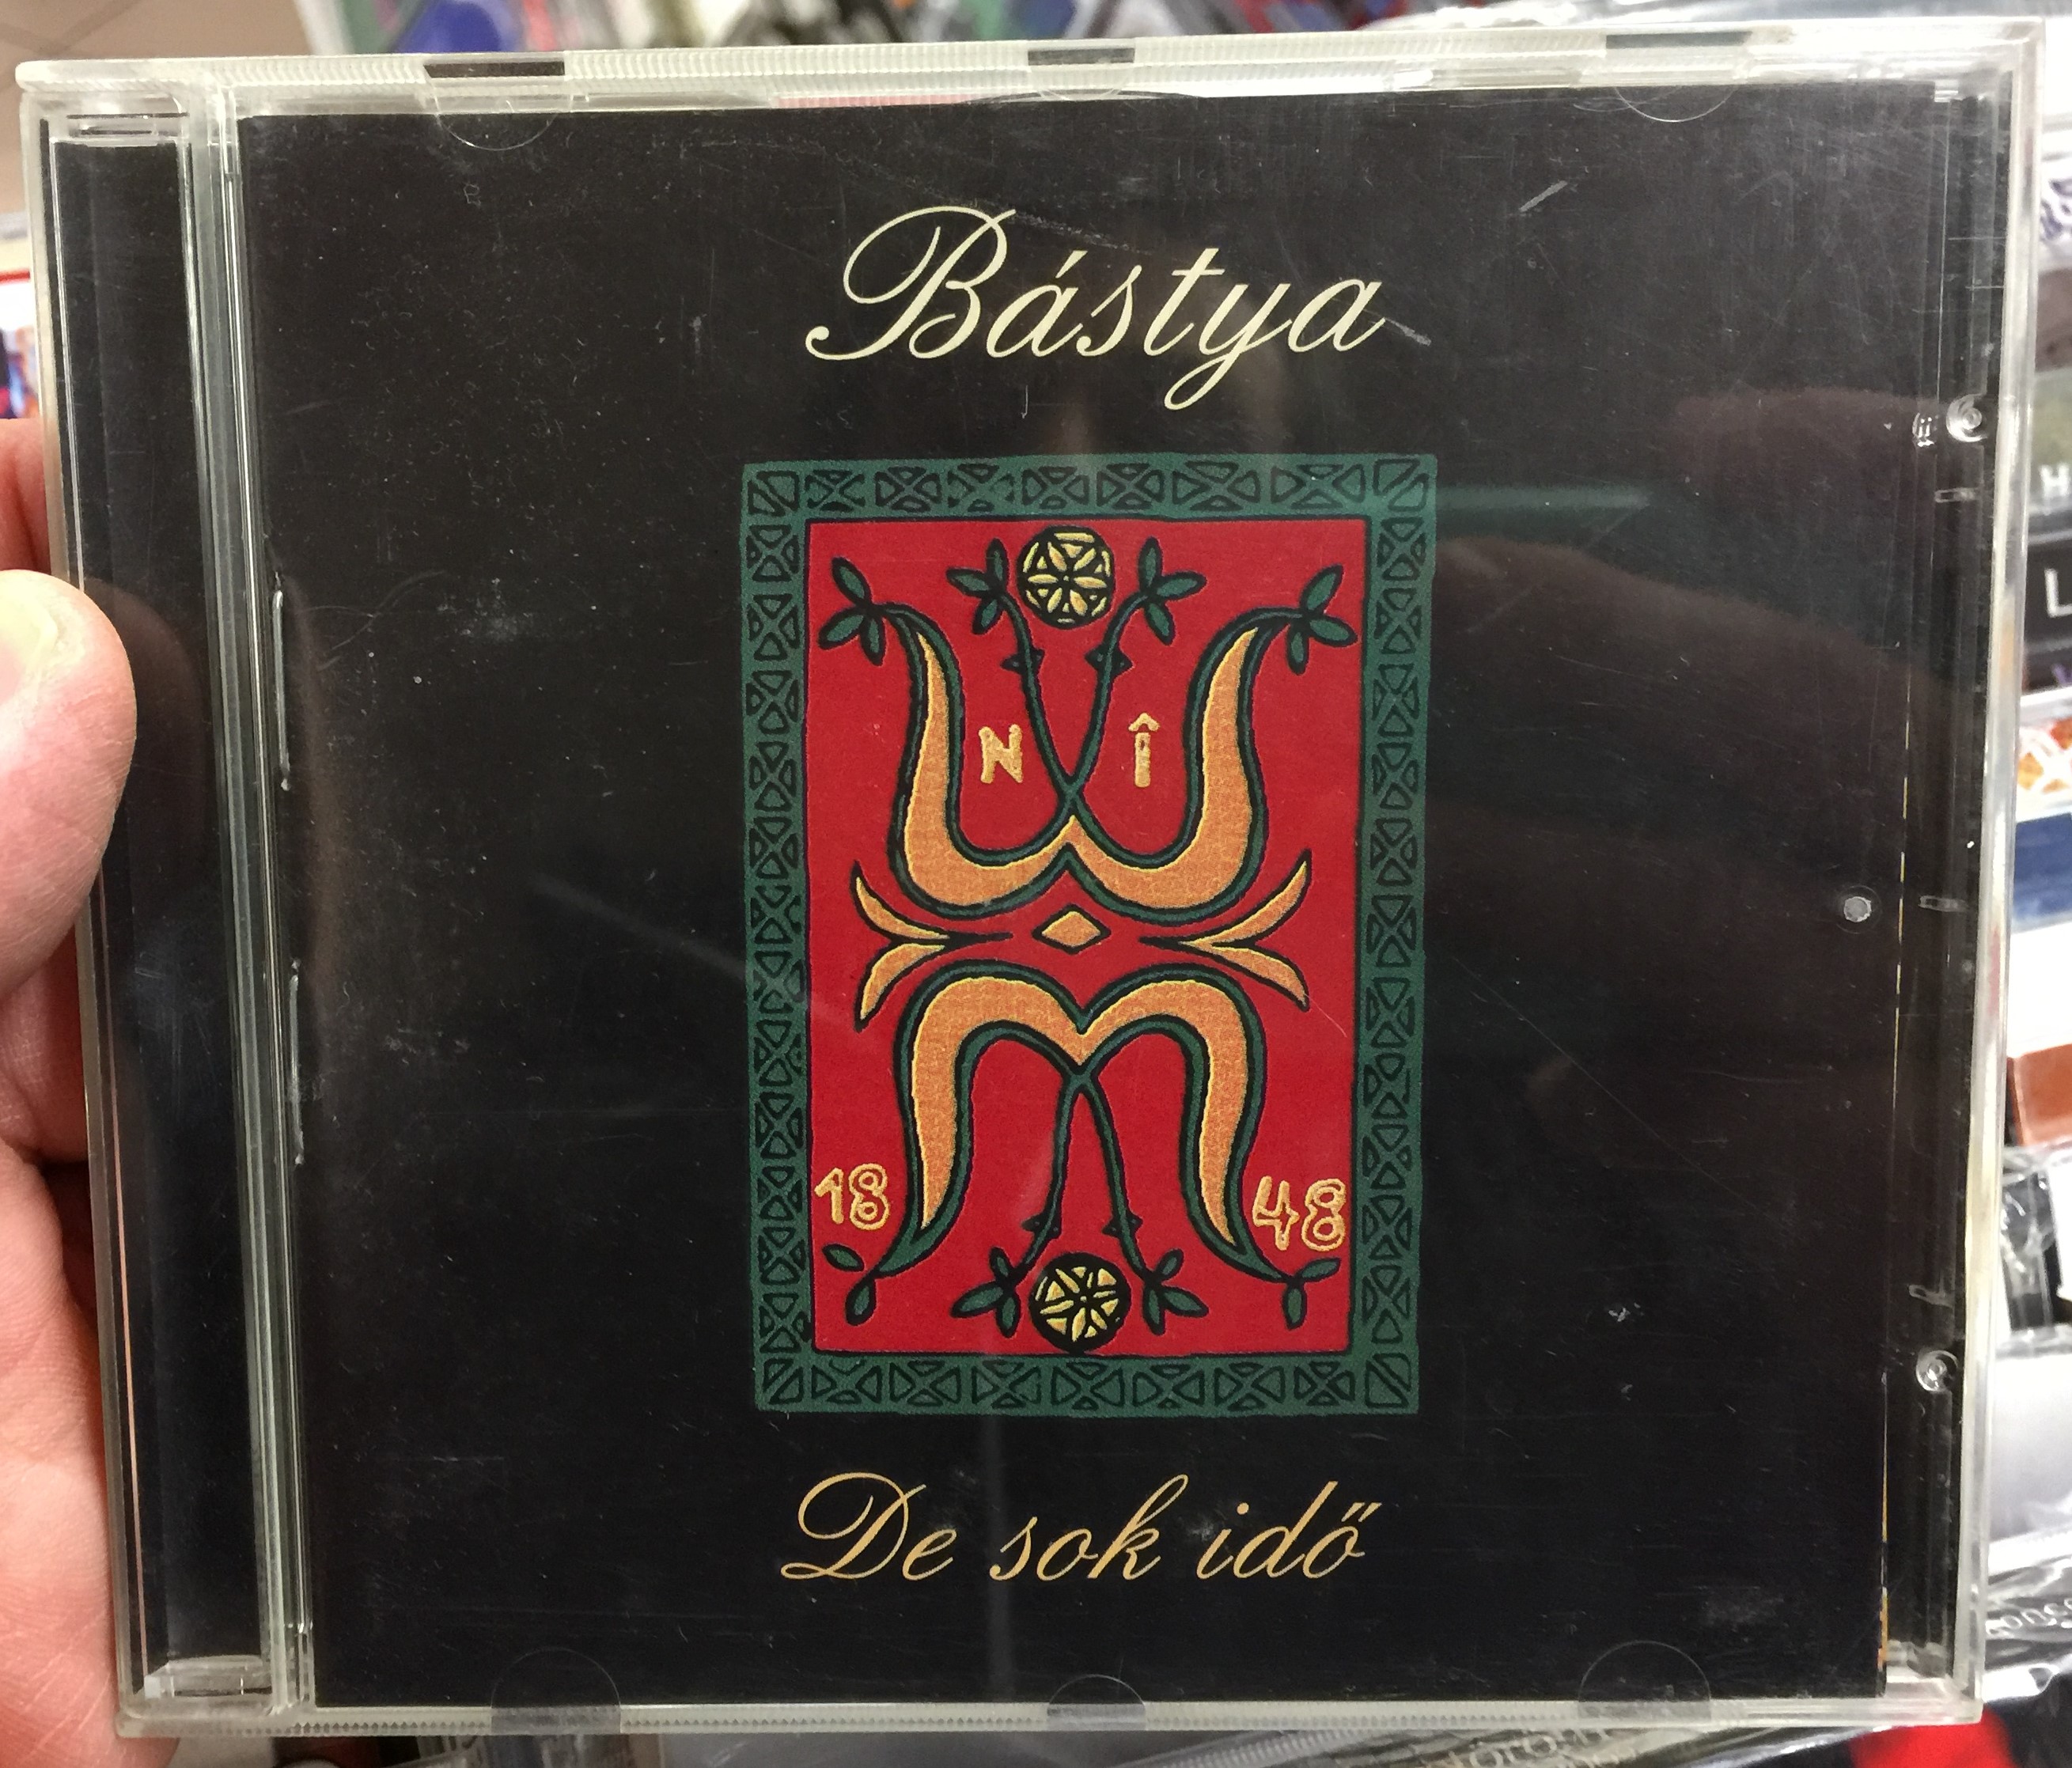 b-stya-de-sok-id-periferic-records-audio-cd-2000-bgcd-102-1-.jpg